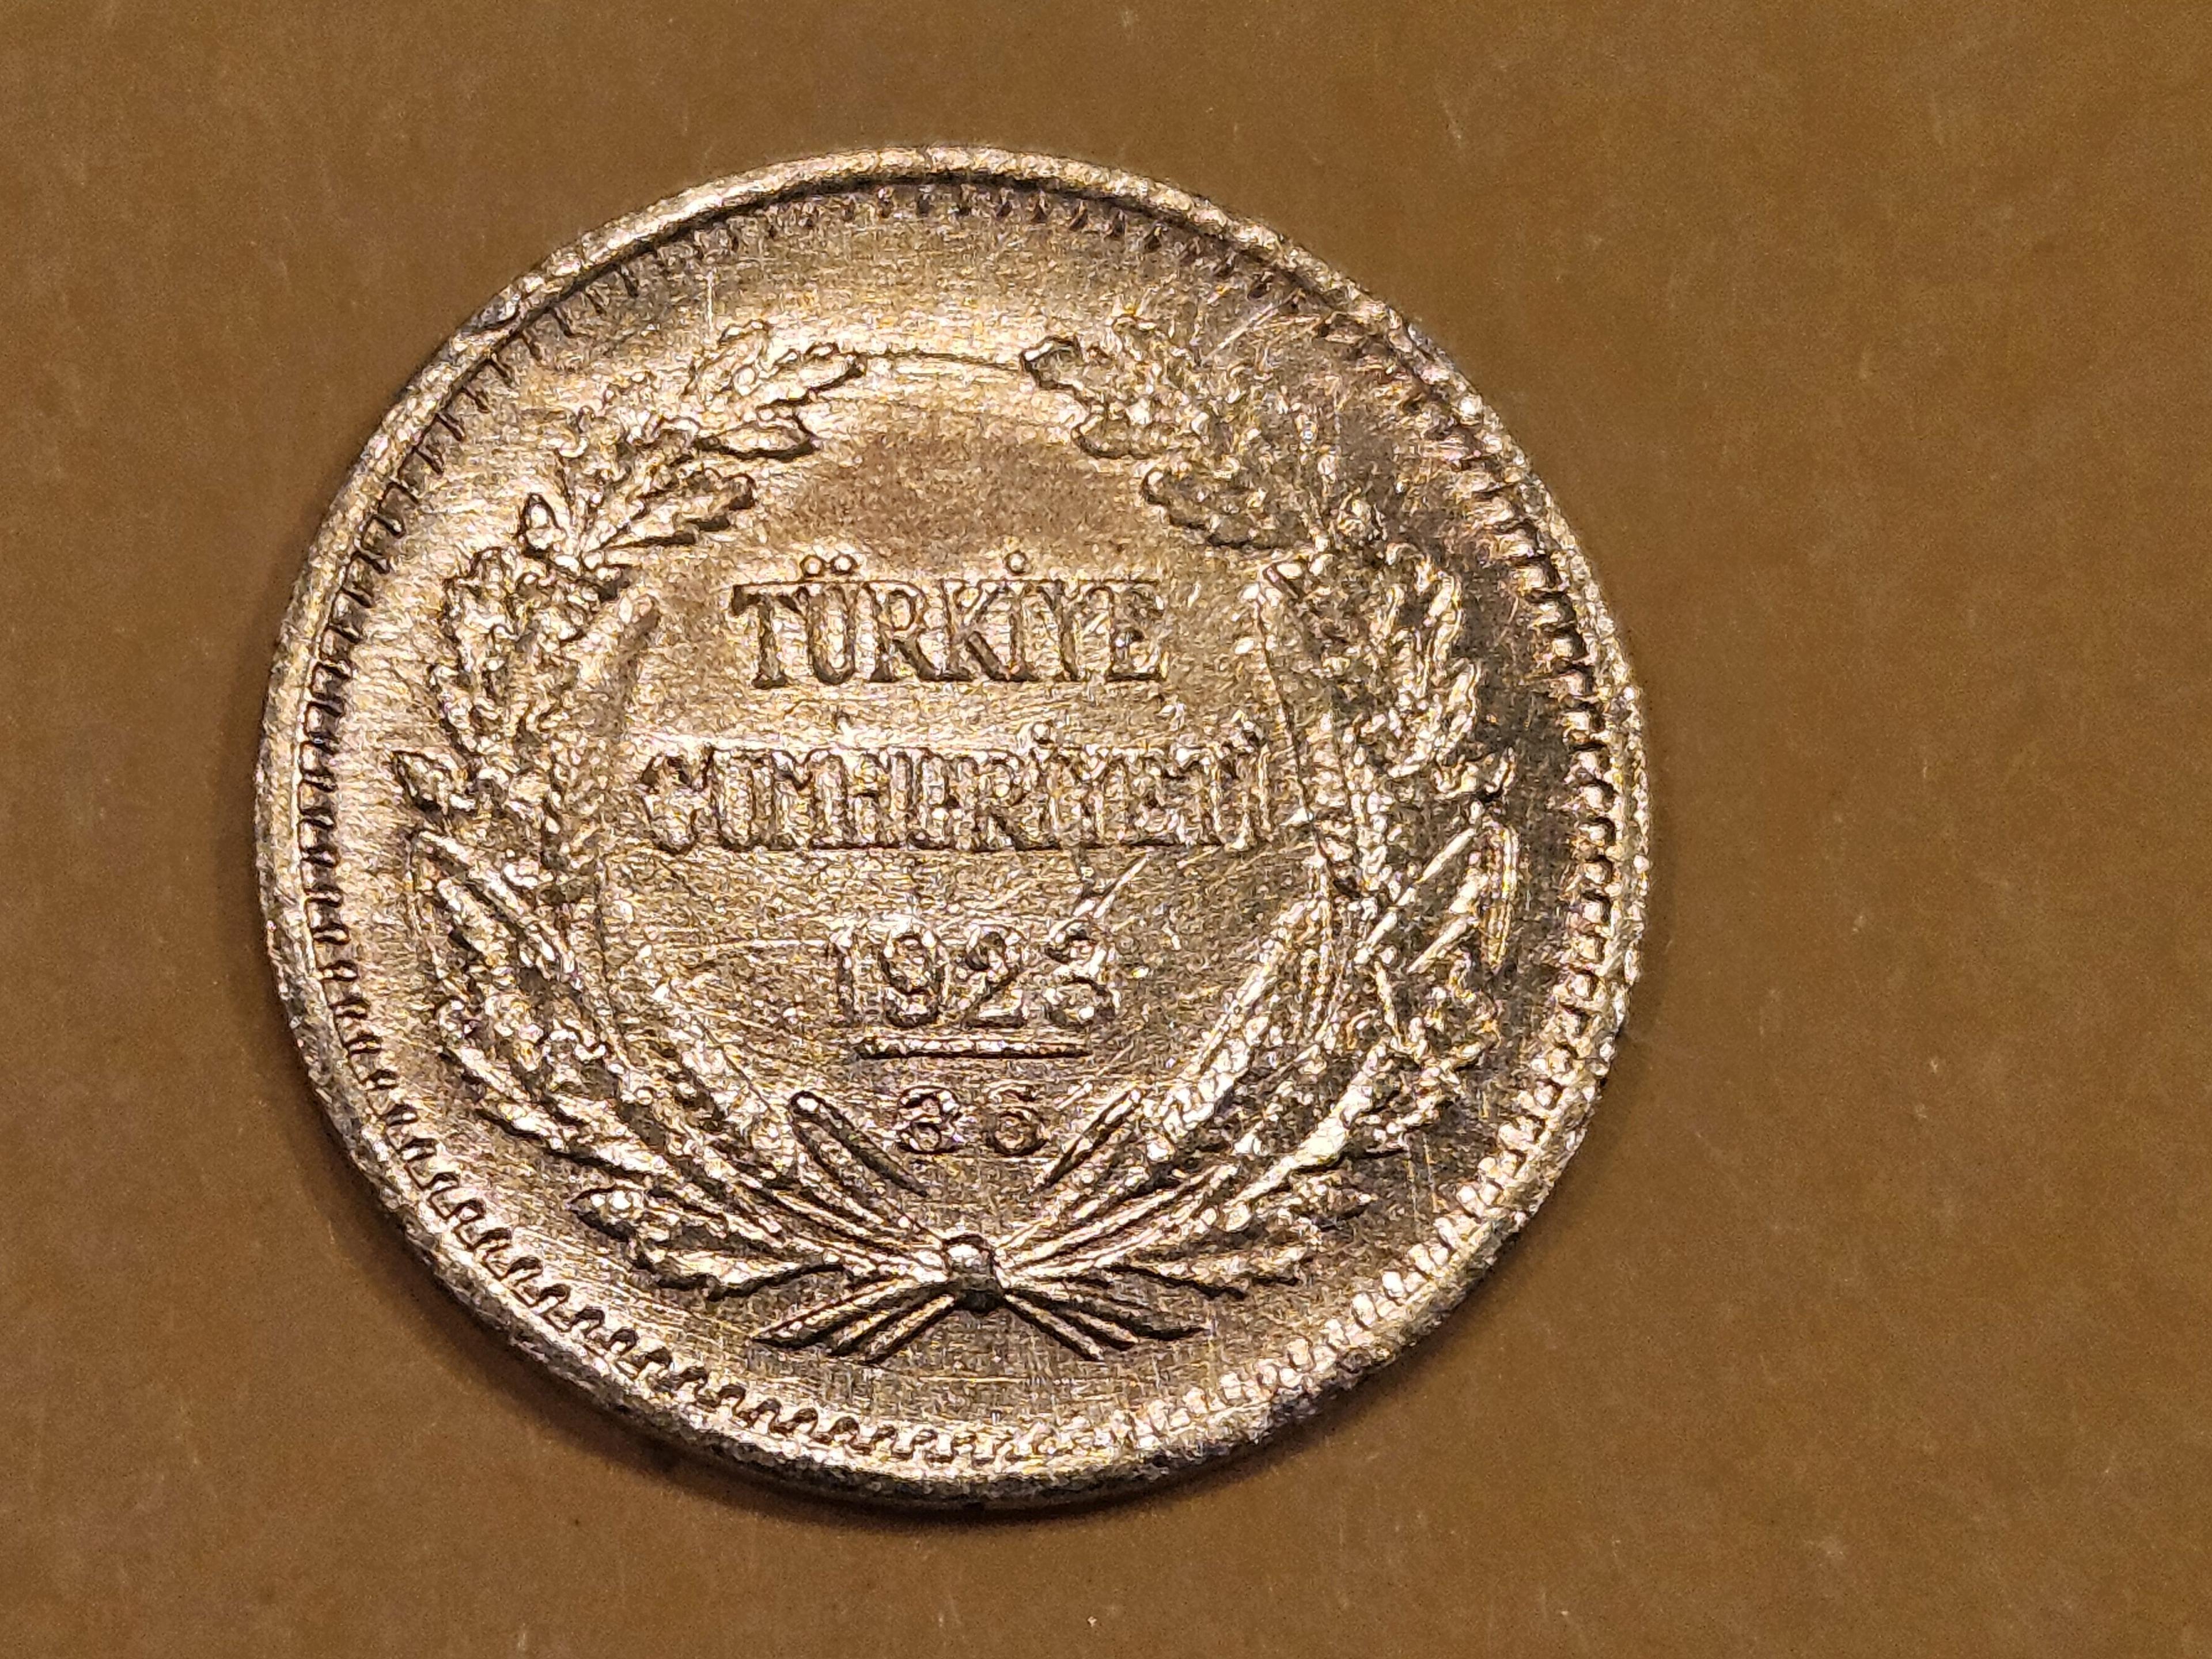 GOLD! Brilliant 1923-36 Turkey 25 kurush